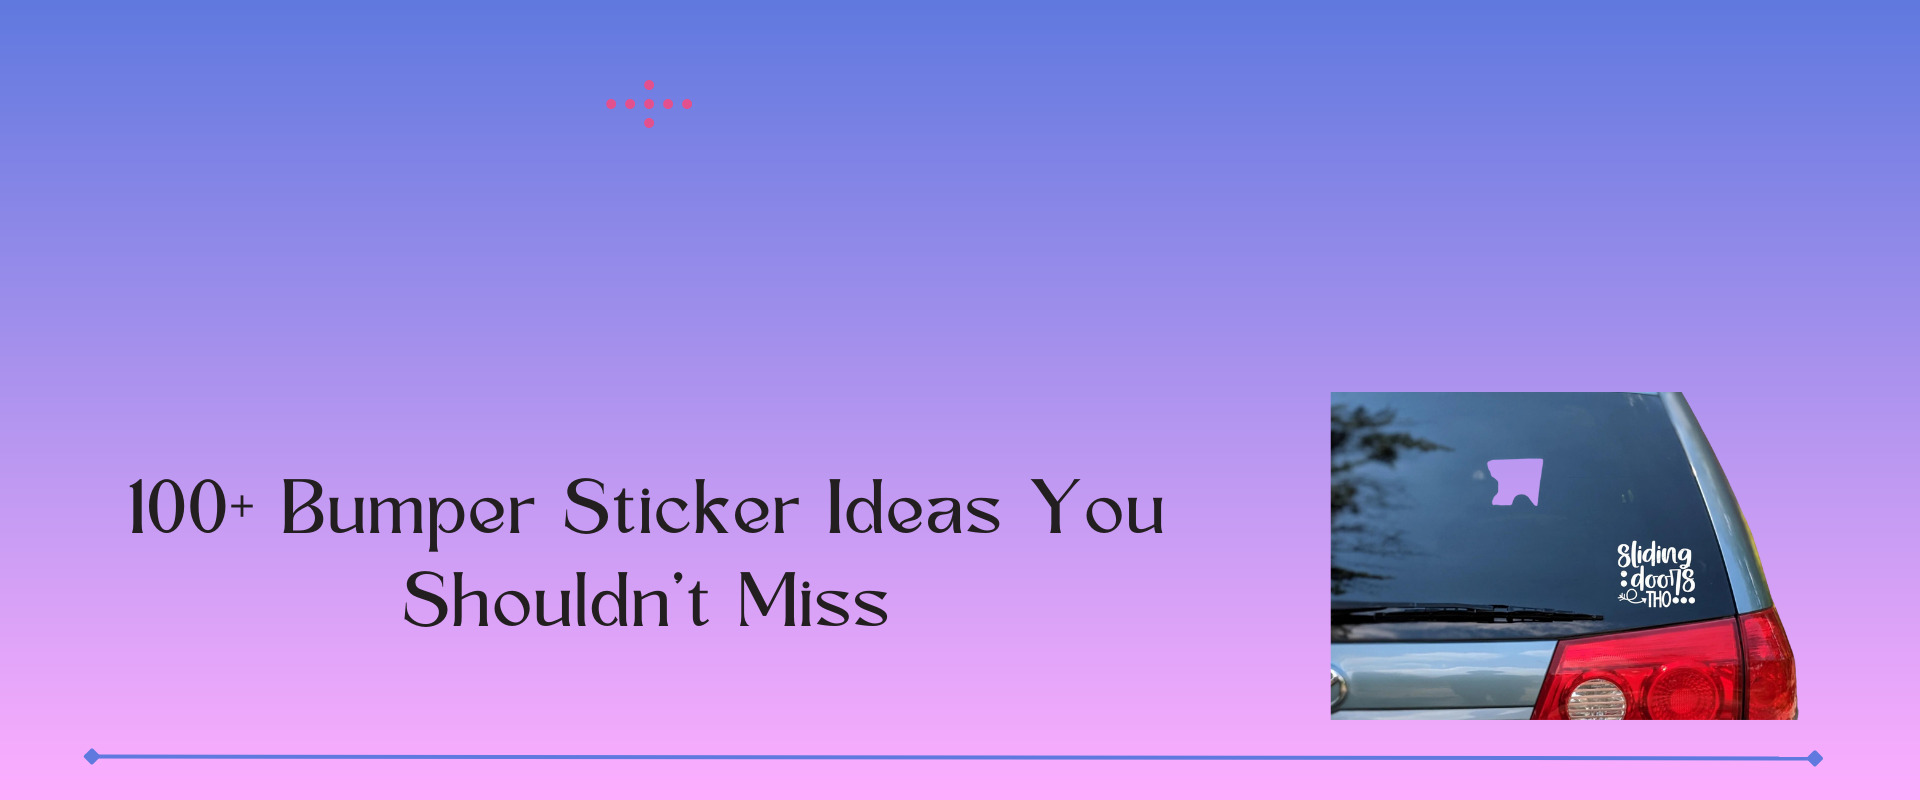 100+ Amazing Bumper Sticker Ideas You Shouldn’t Miss